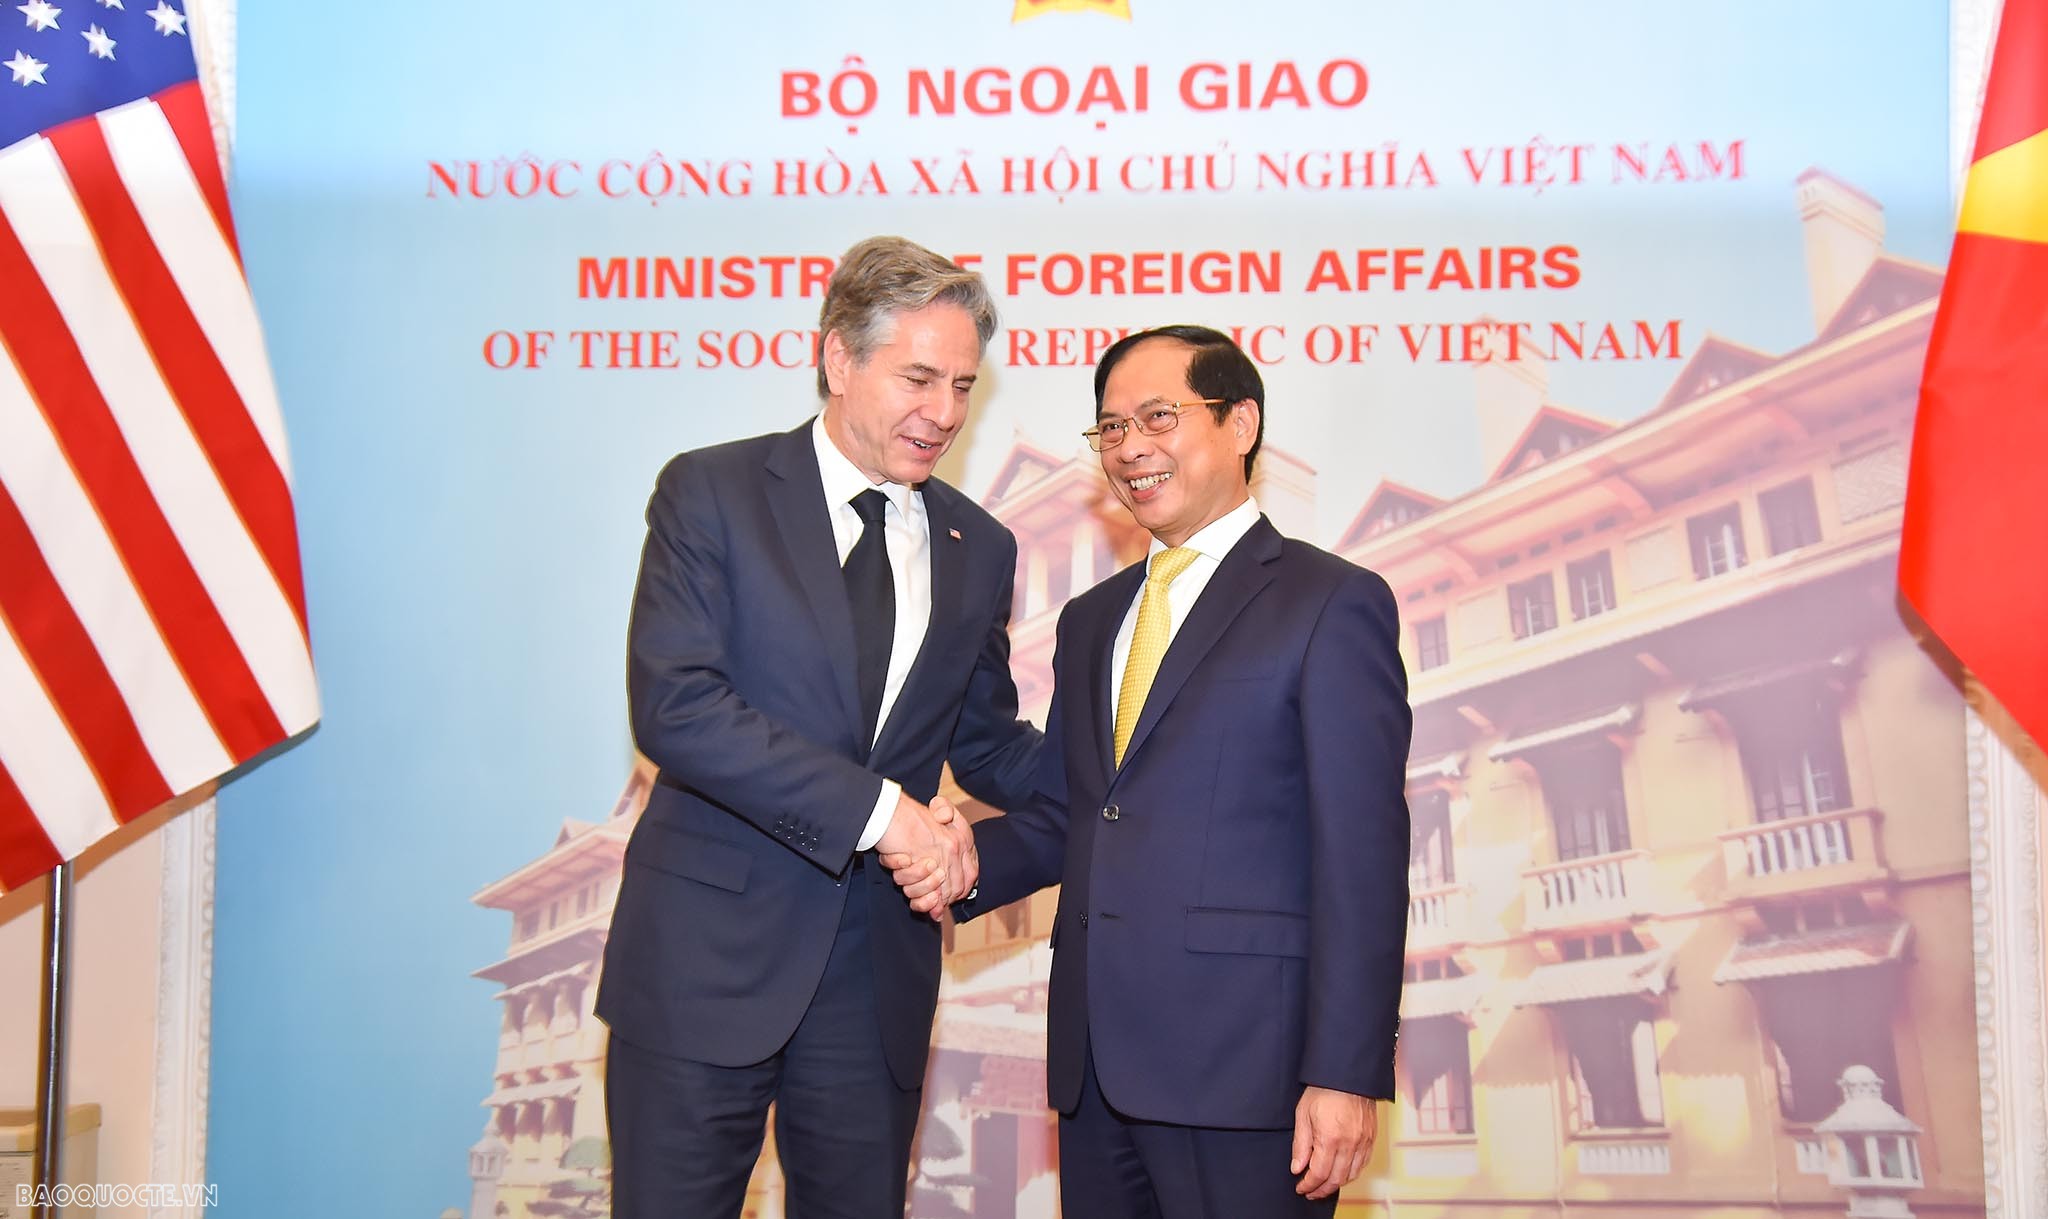 Foreign Minister Bui Thanh Son welcomed US Secretary of State Antony Blinken